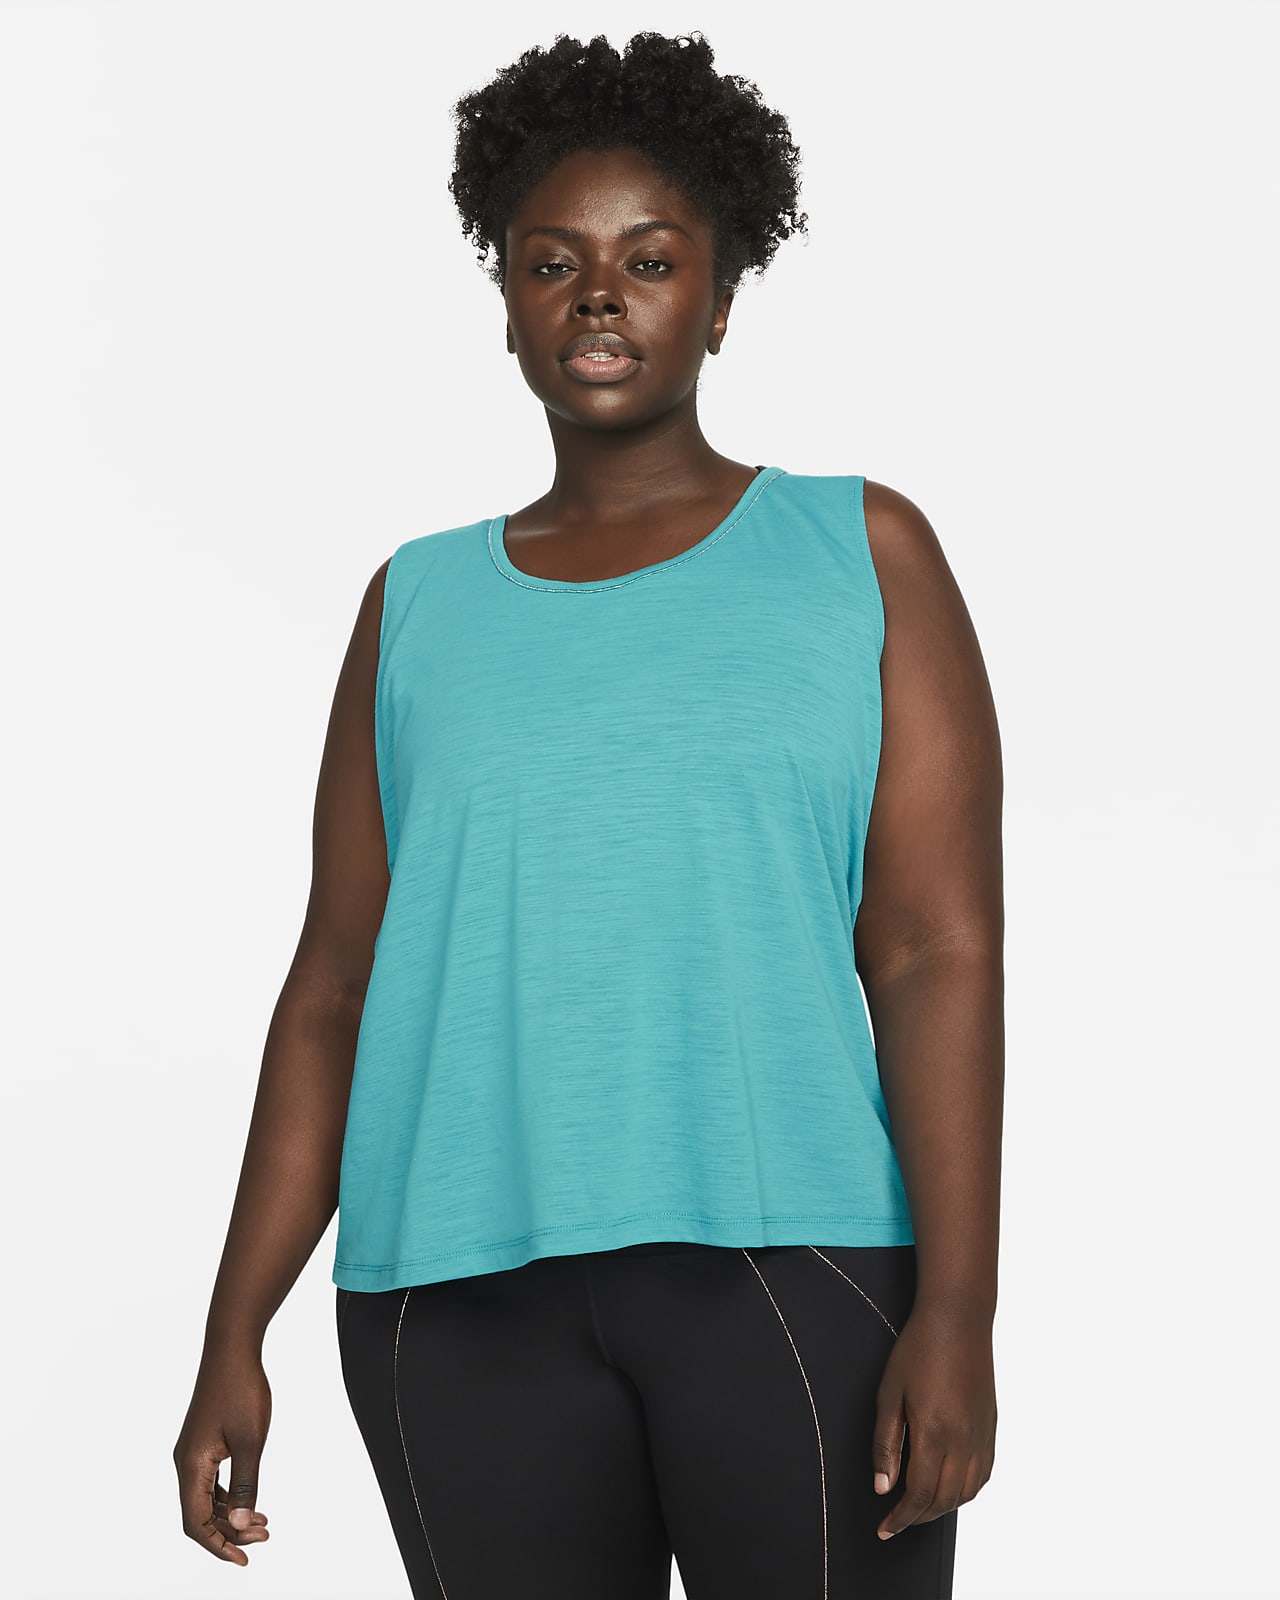 Nike Women's Yoga Dri-FIT Tank